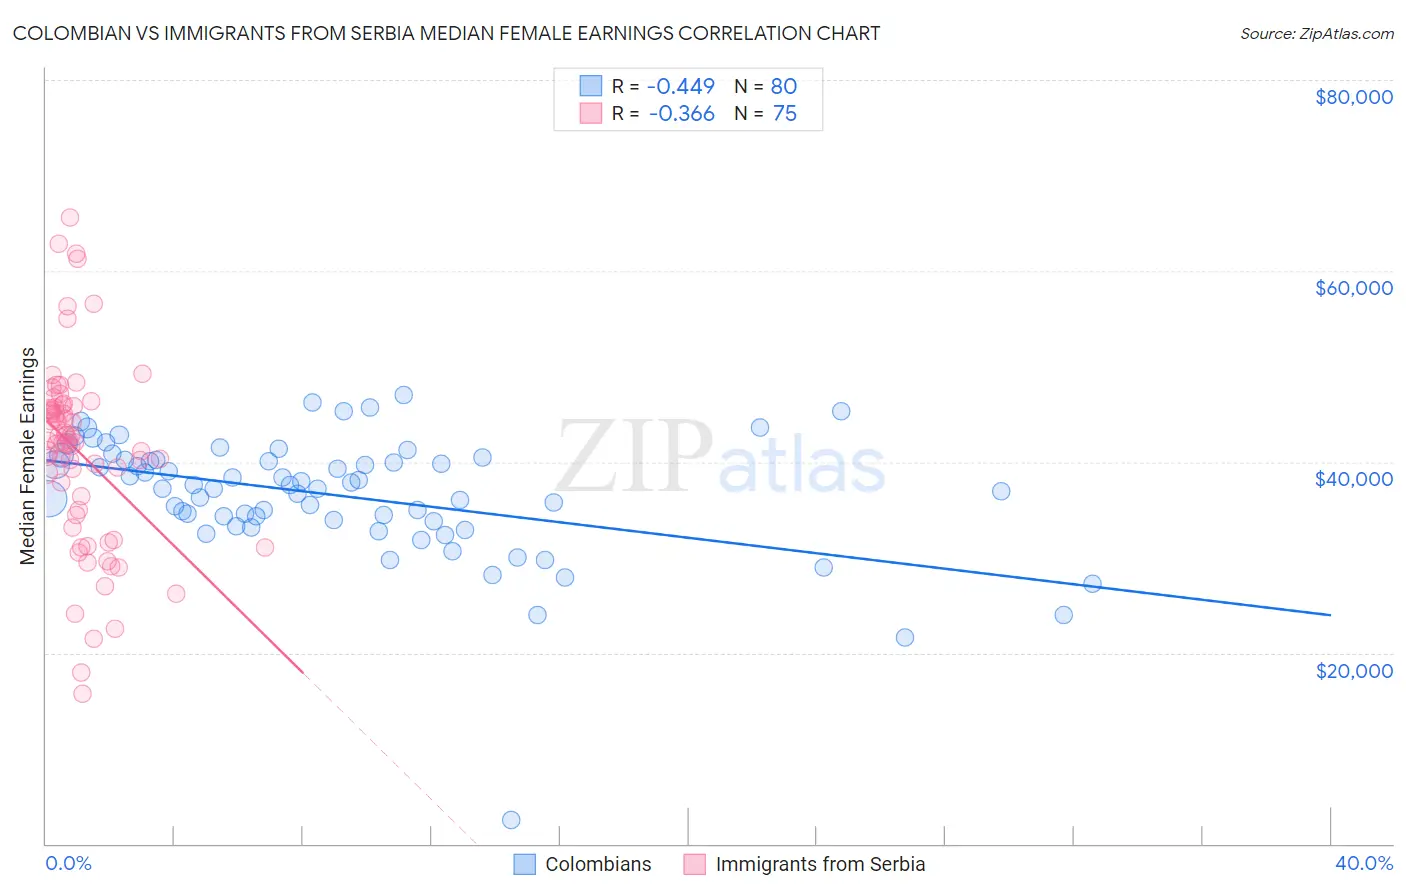 Colombian vs Immigrants from Serbia Median Female Earnings